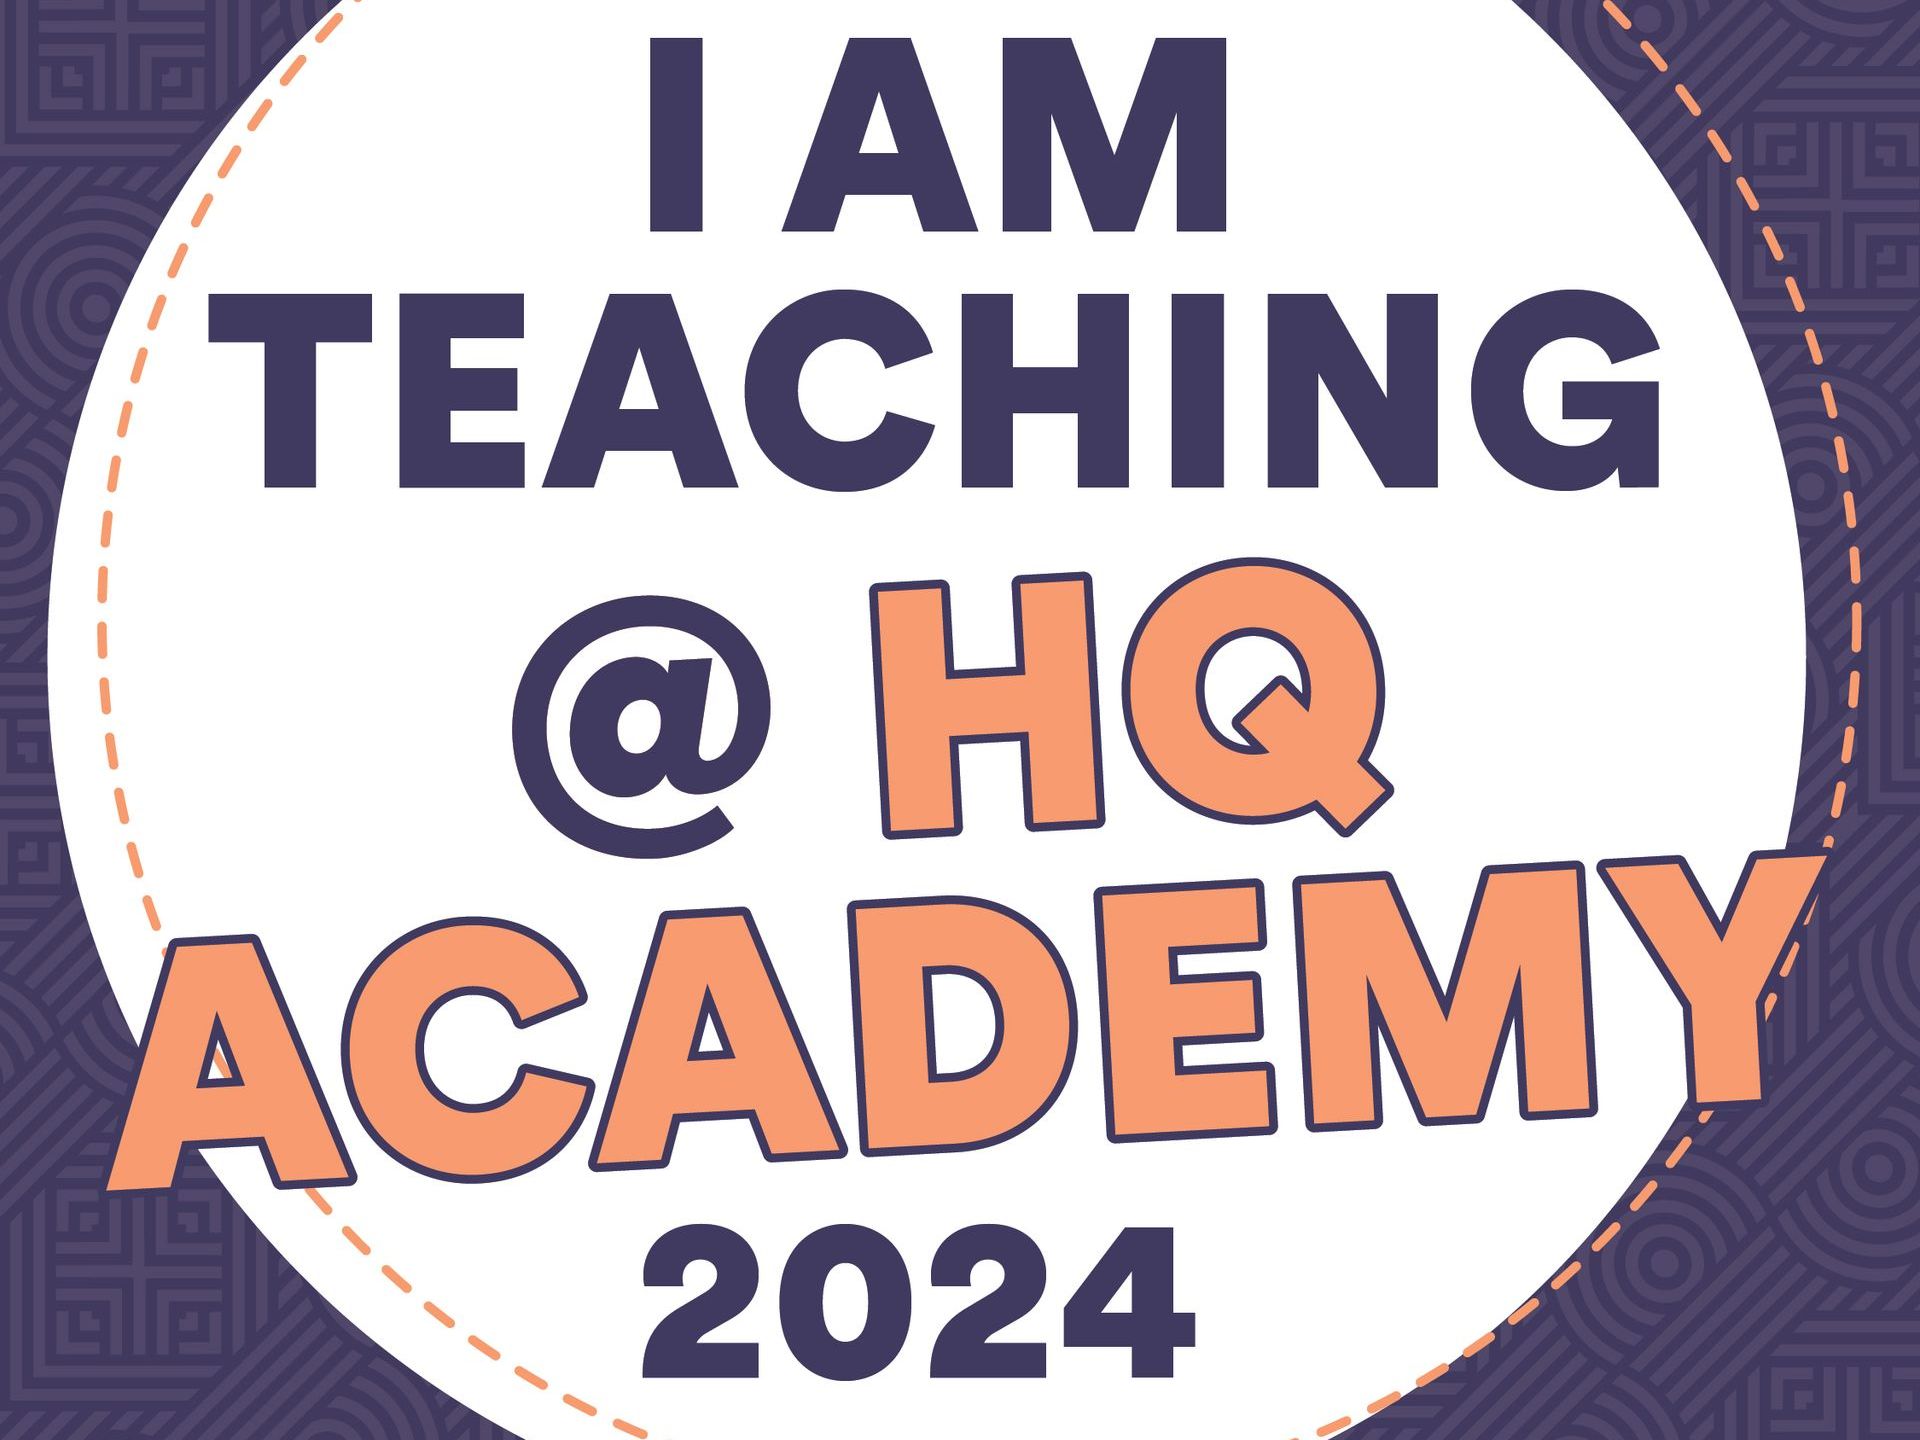 I'm teaching @ HQ Academy 2024